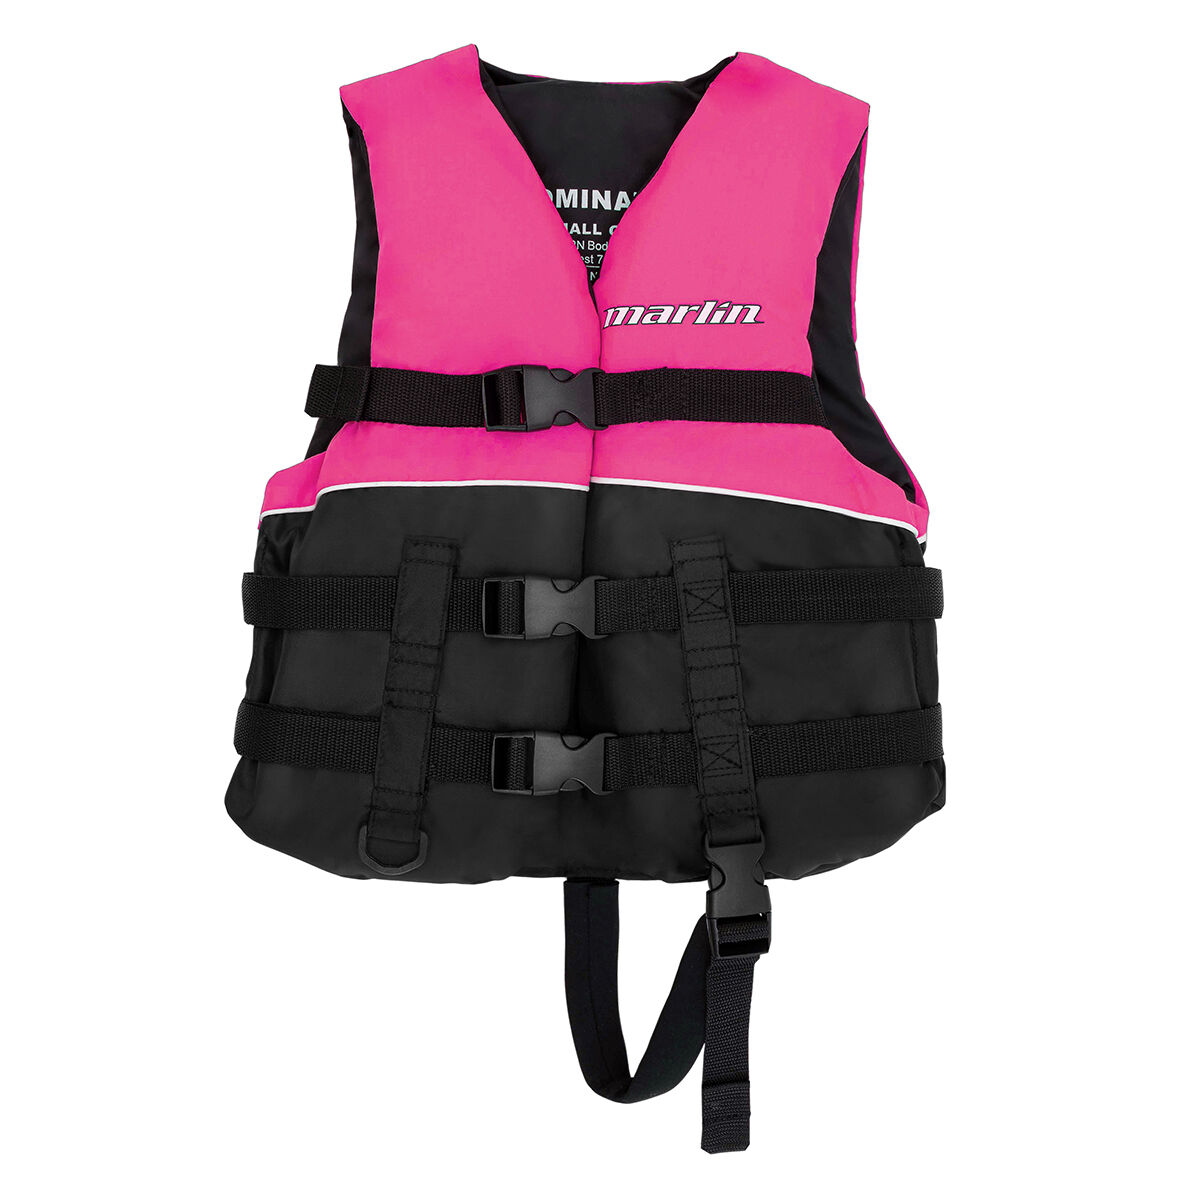 Inflatable PFD Life Vest - Hobie, Fishing, Lightweight